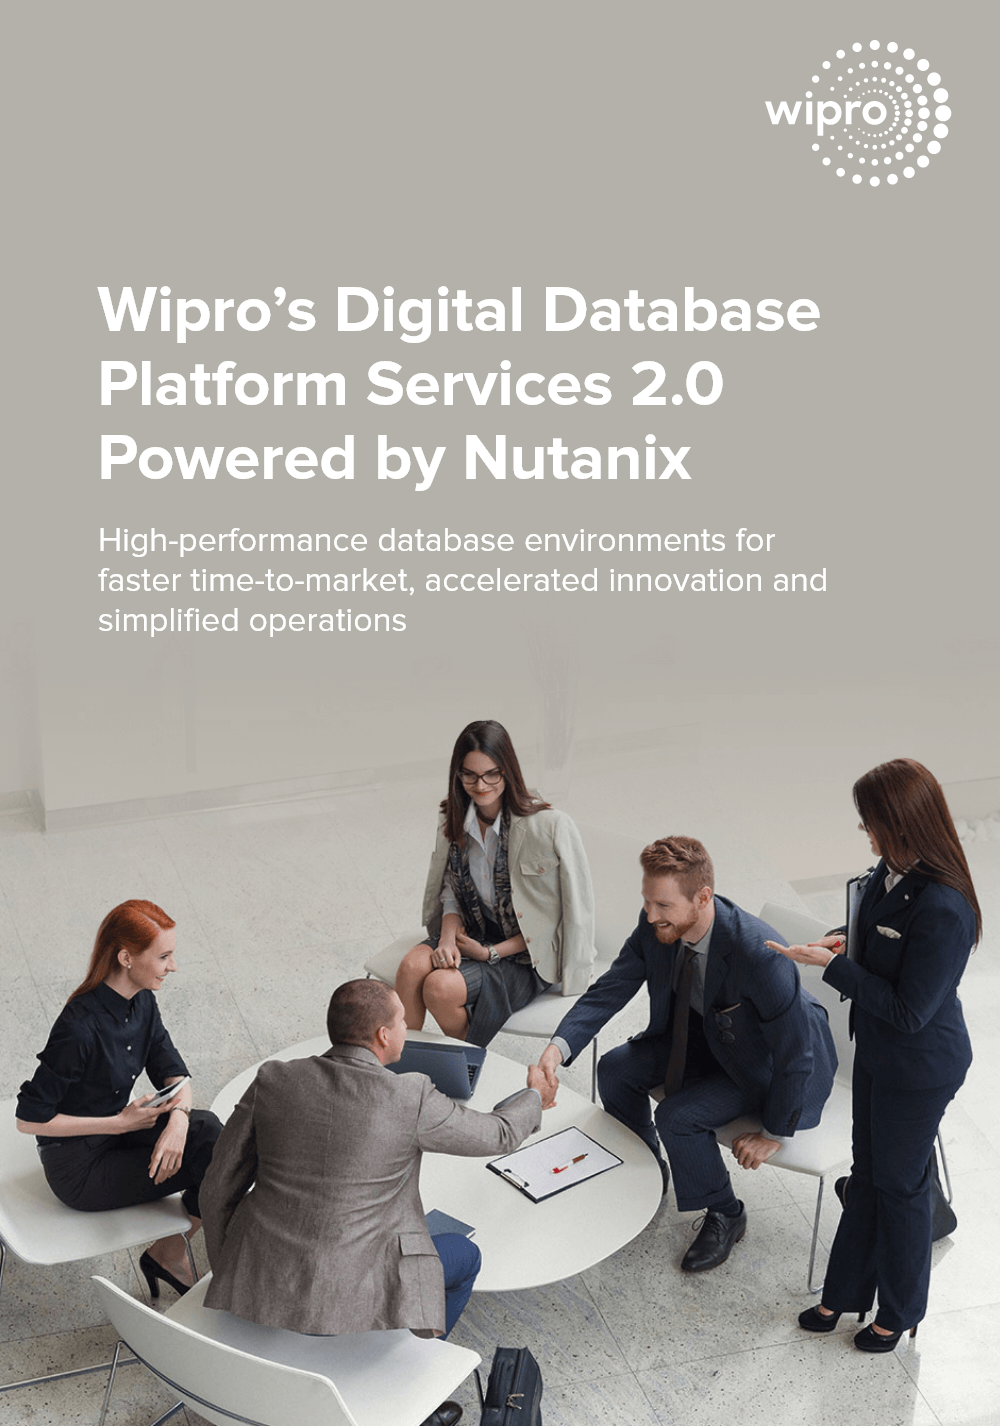 Wipro’s Digital Database Platform Services 2.0 Powered by Nutanix